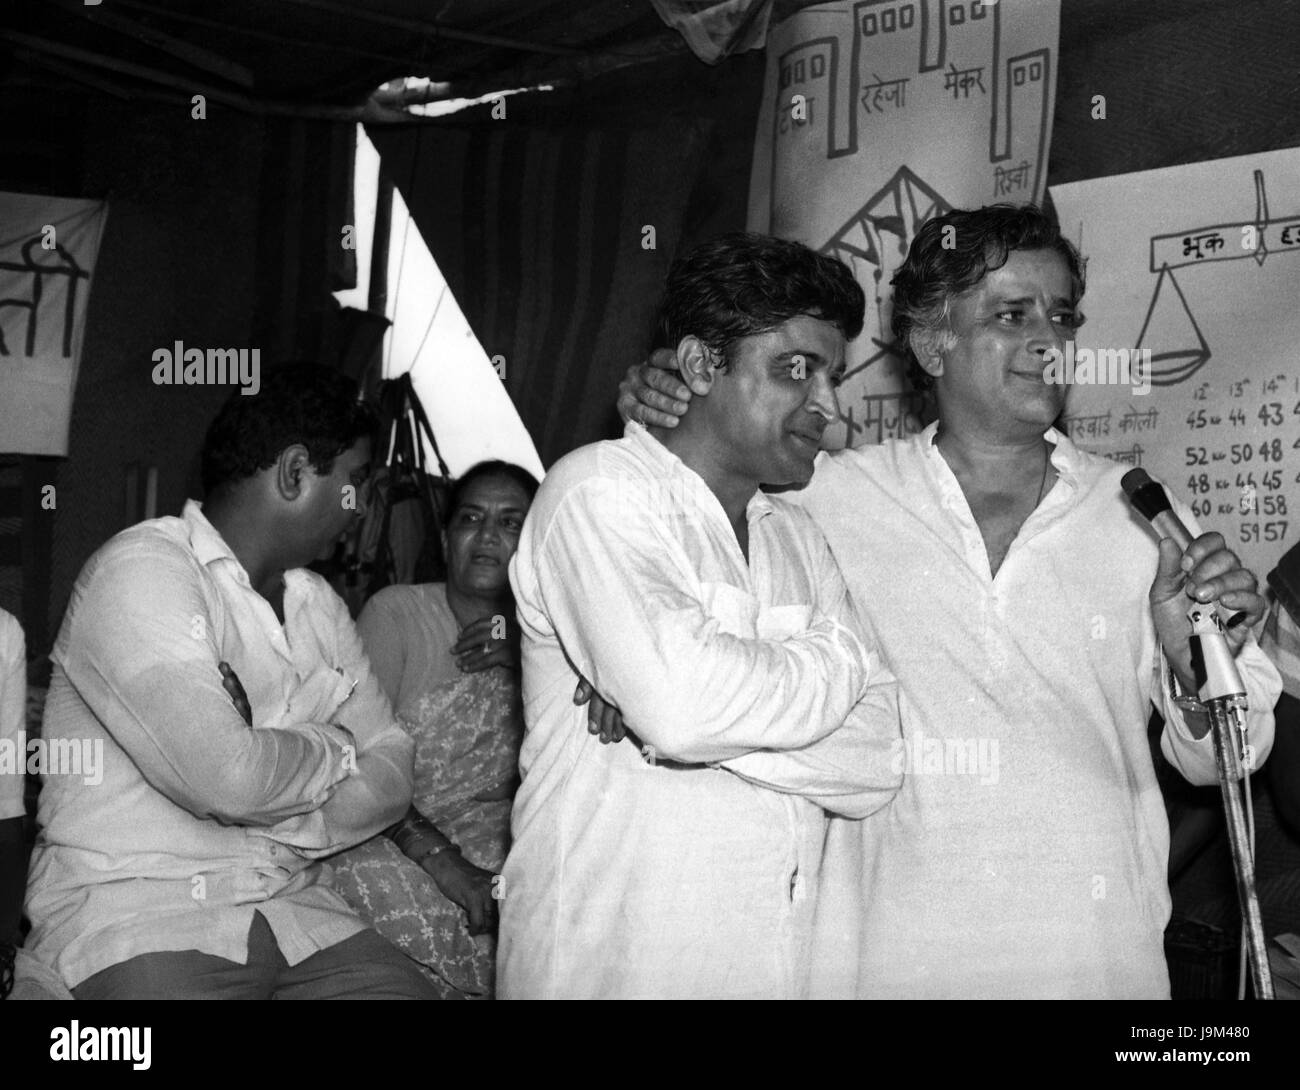 Shaukat Azmi, Javed Akhtar and Shashi Kapoor at rally, India - vca 255163 Stock Photo